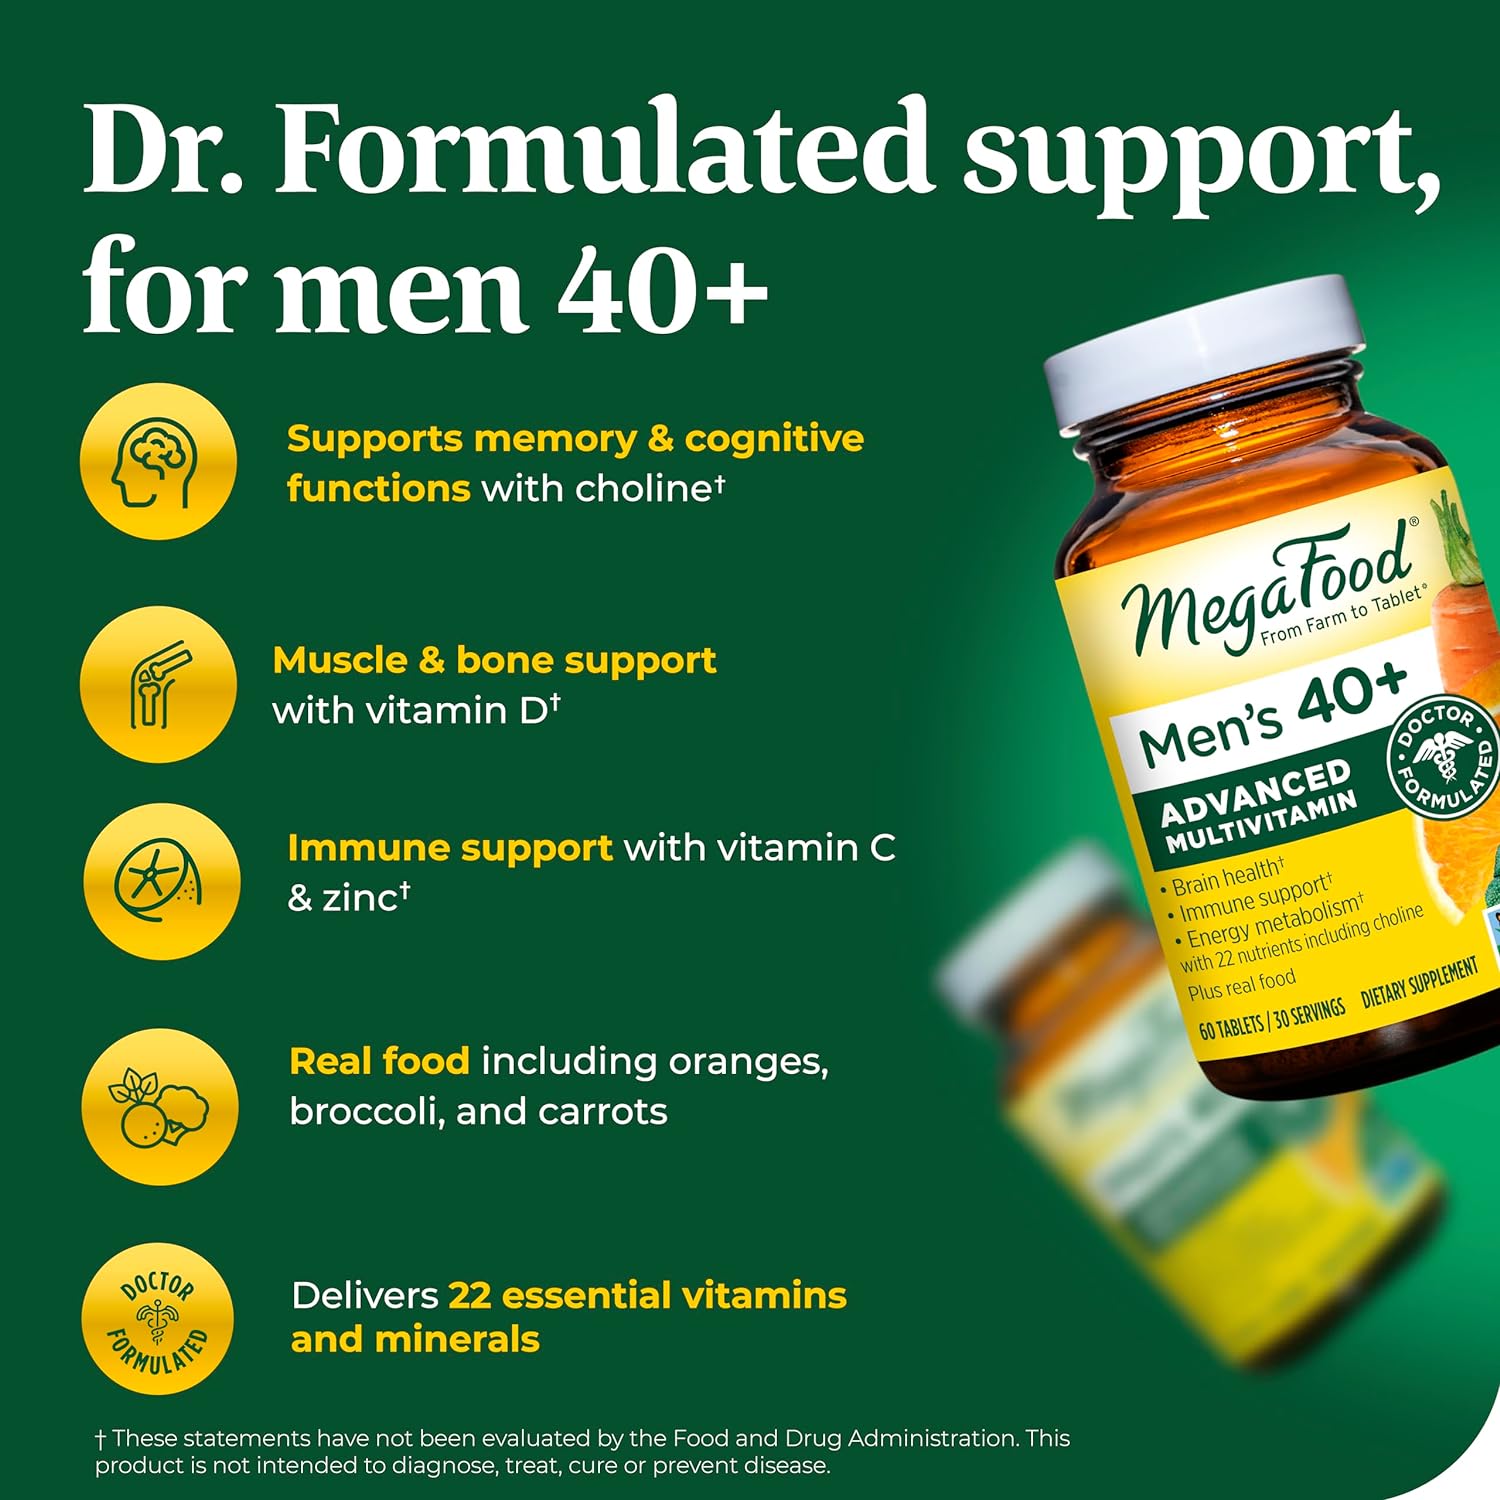 MegaFood Men's 40+ Advanced Multivitamin for Men - Dr-Formulated - Choline, Vitamin B, Vitamin C, Vitamin D, Zinc & Real Food - Brain Health, Immune Support - Vegetarian - 120 Tabs (60 Servings) : Health & Household